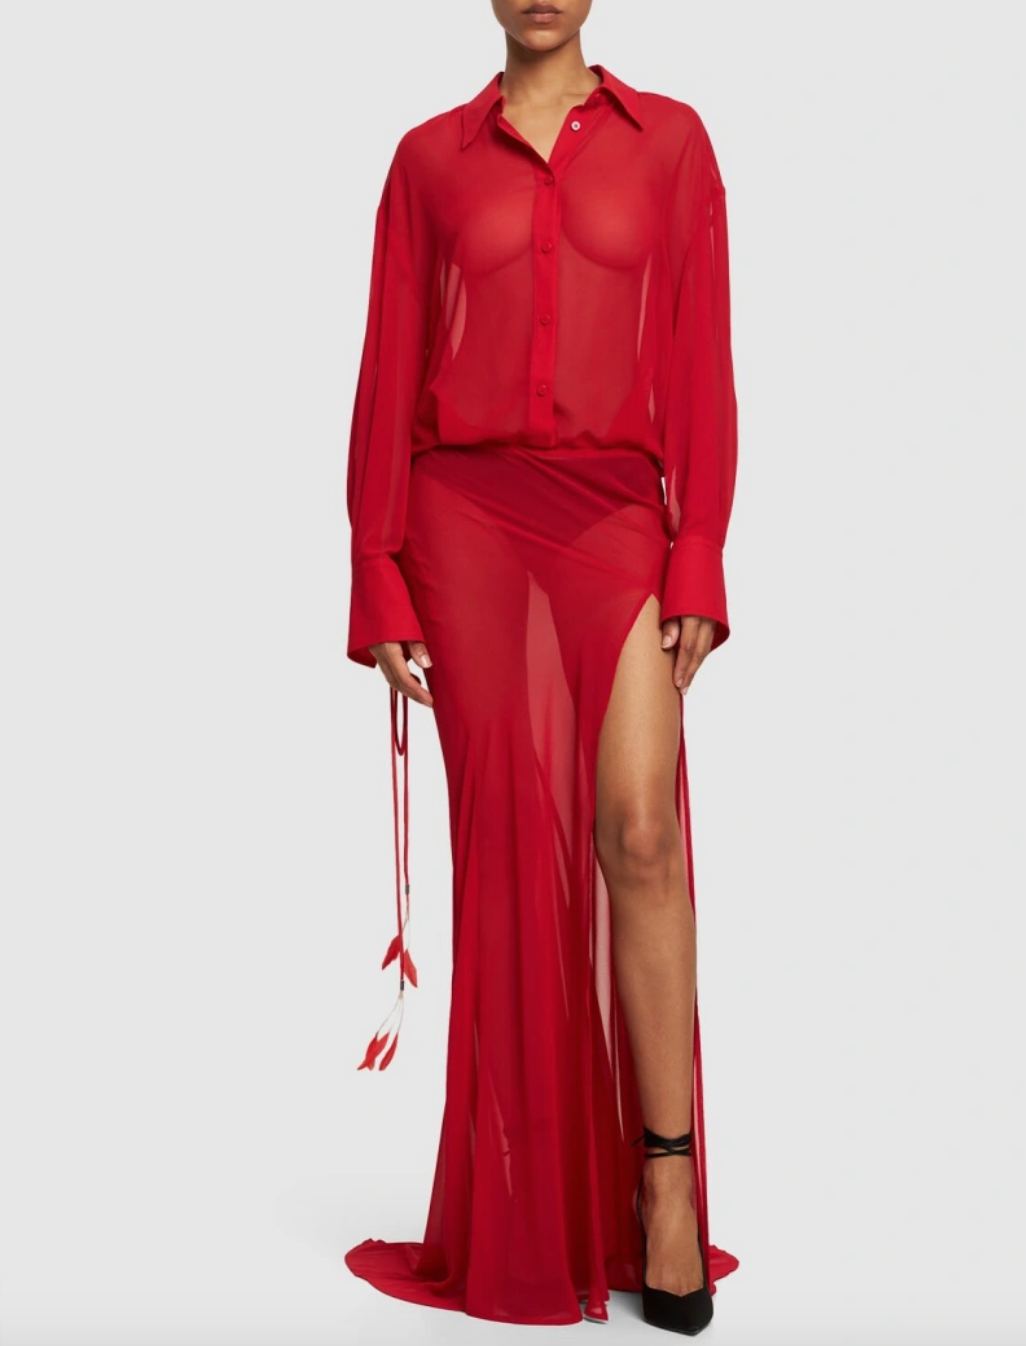 Ariana Madix's Red Sheer Shirt Dress